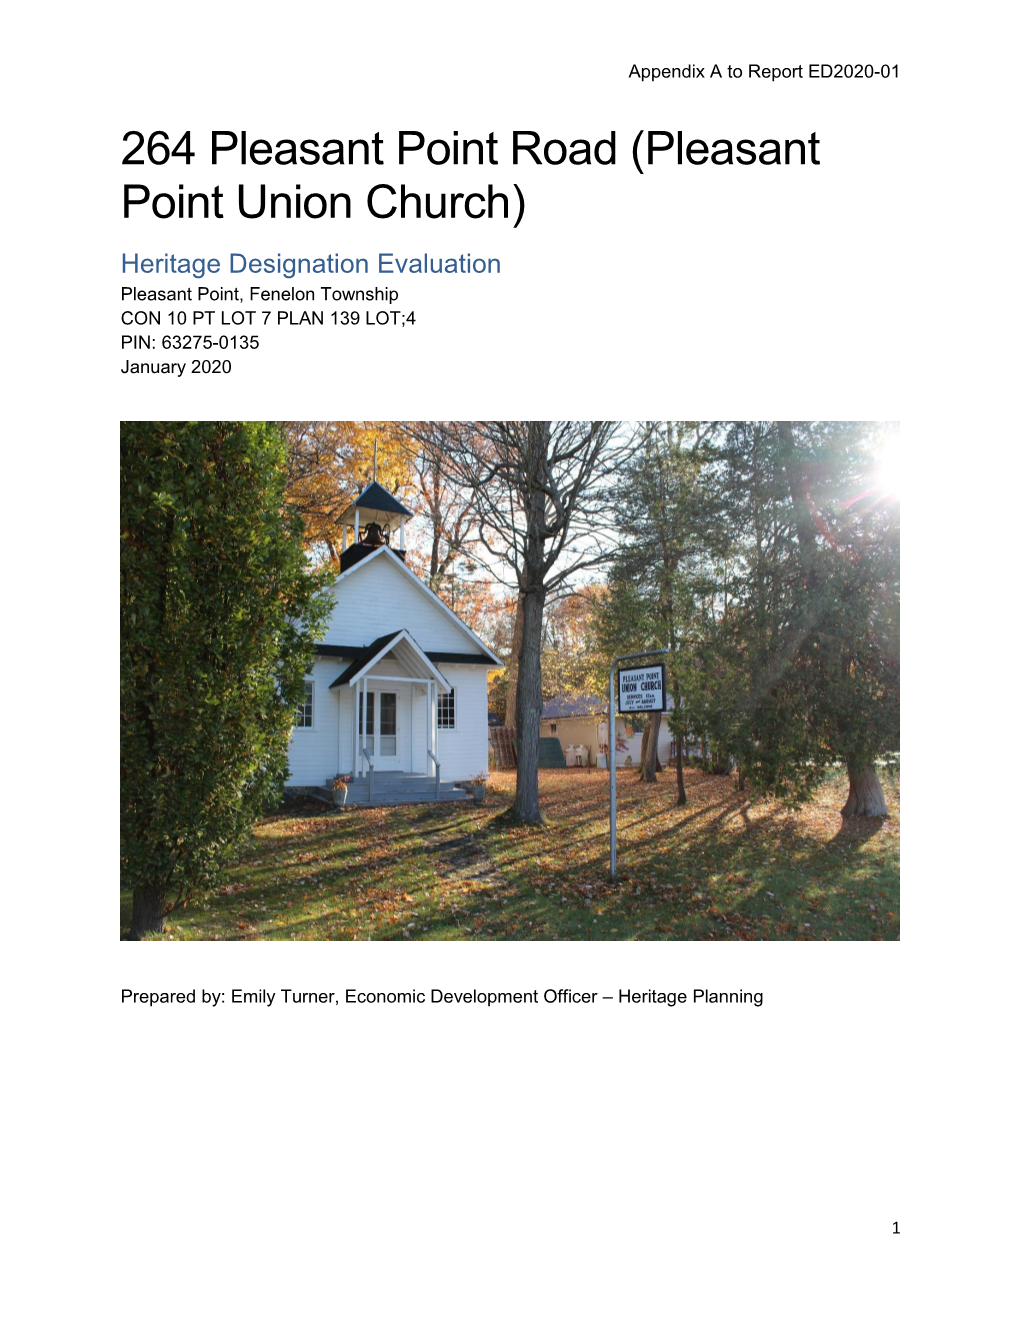 Pleasant Point Union Church) Heritage Designation Evaluation Pleasant Point, Fenelon Township CON 10 PT LOT 7 PLAN 139 LOT;4 PIN: 63275-0135 January 2020